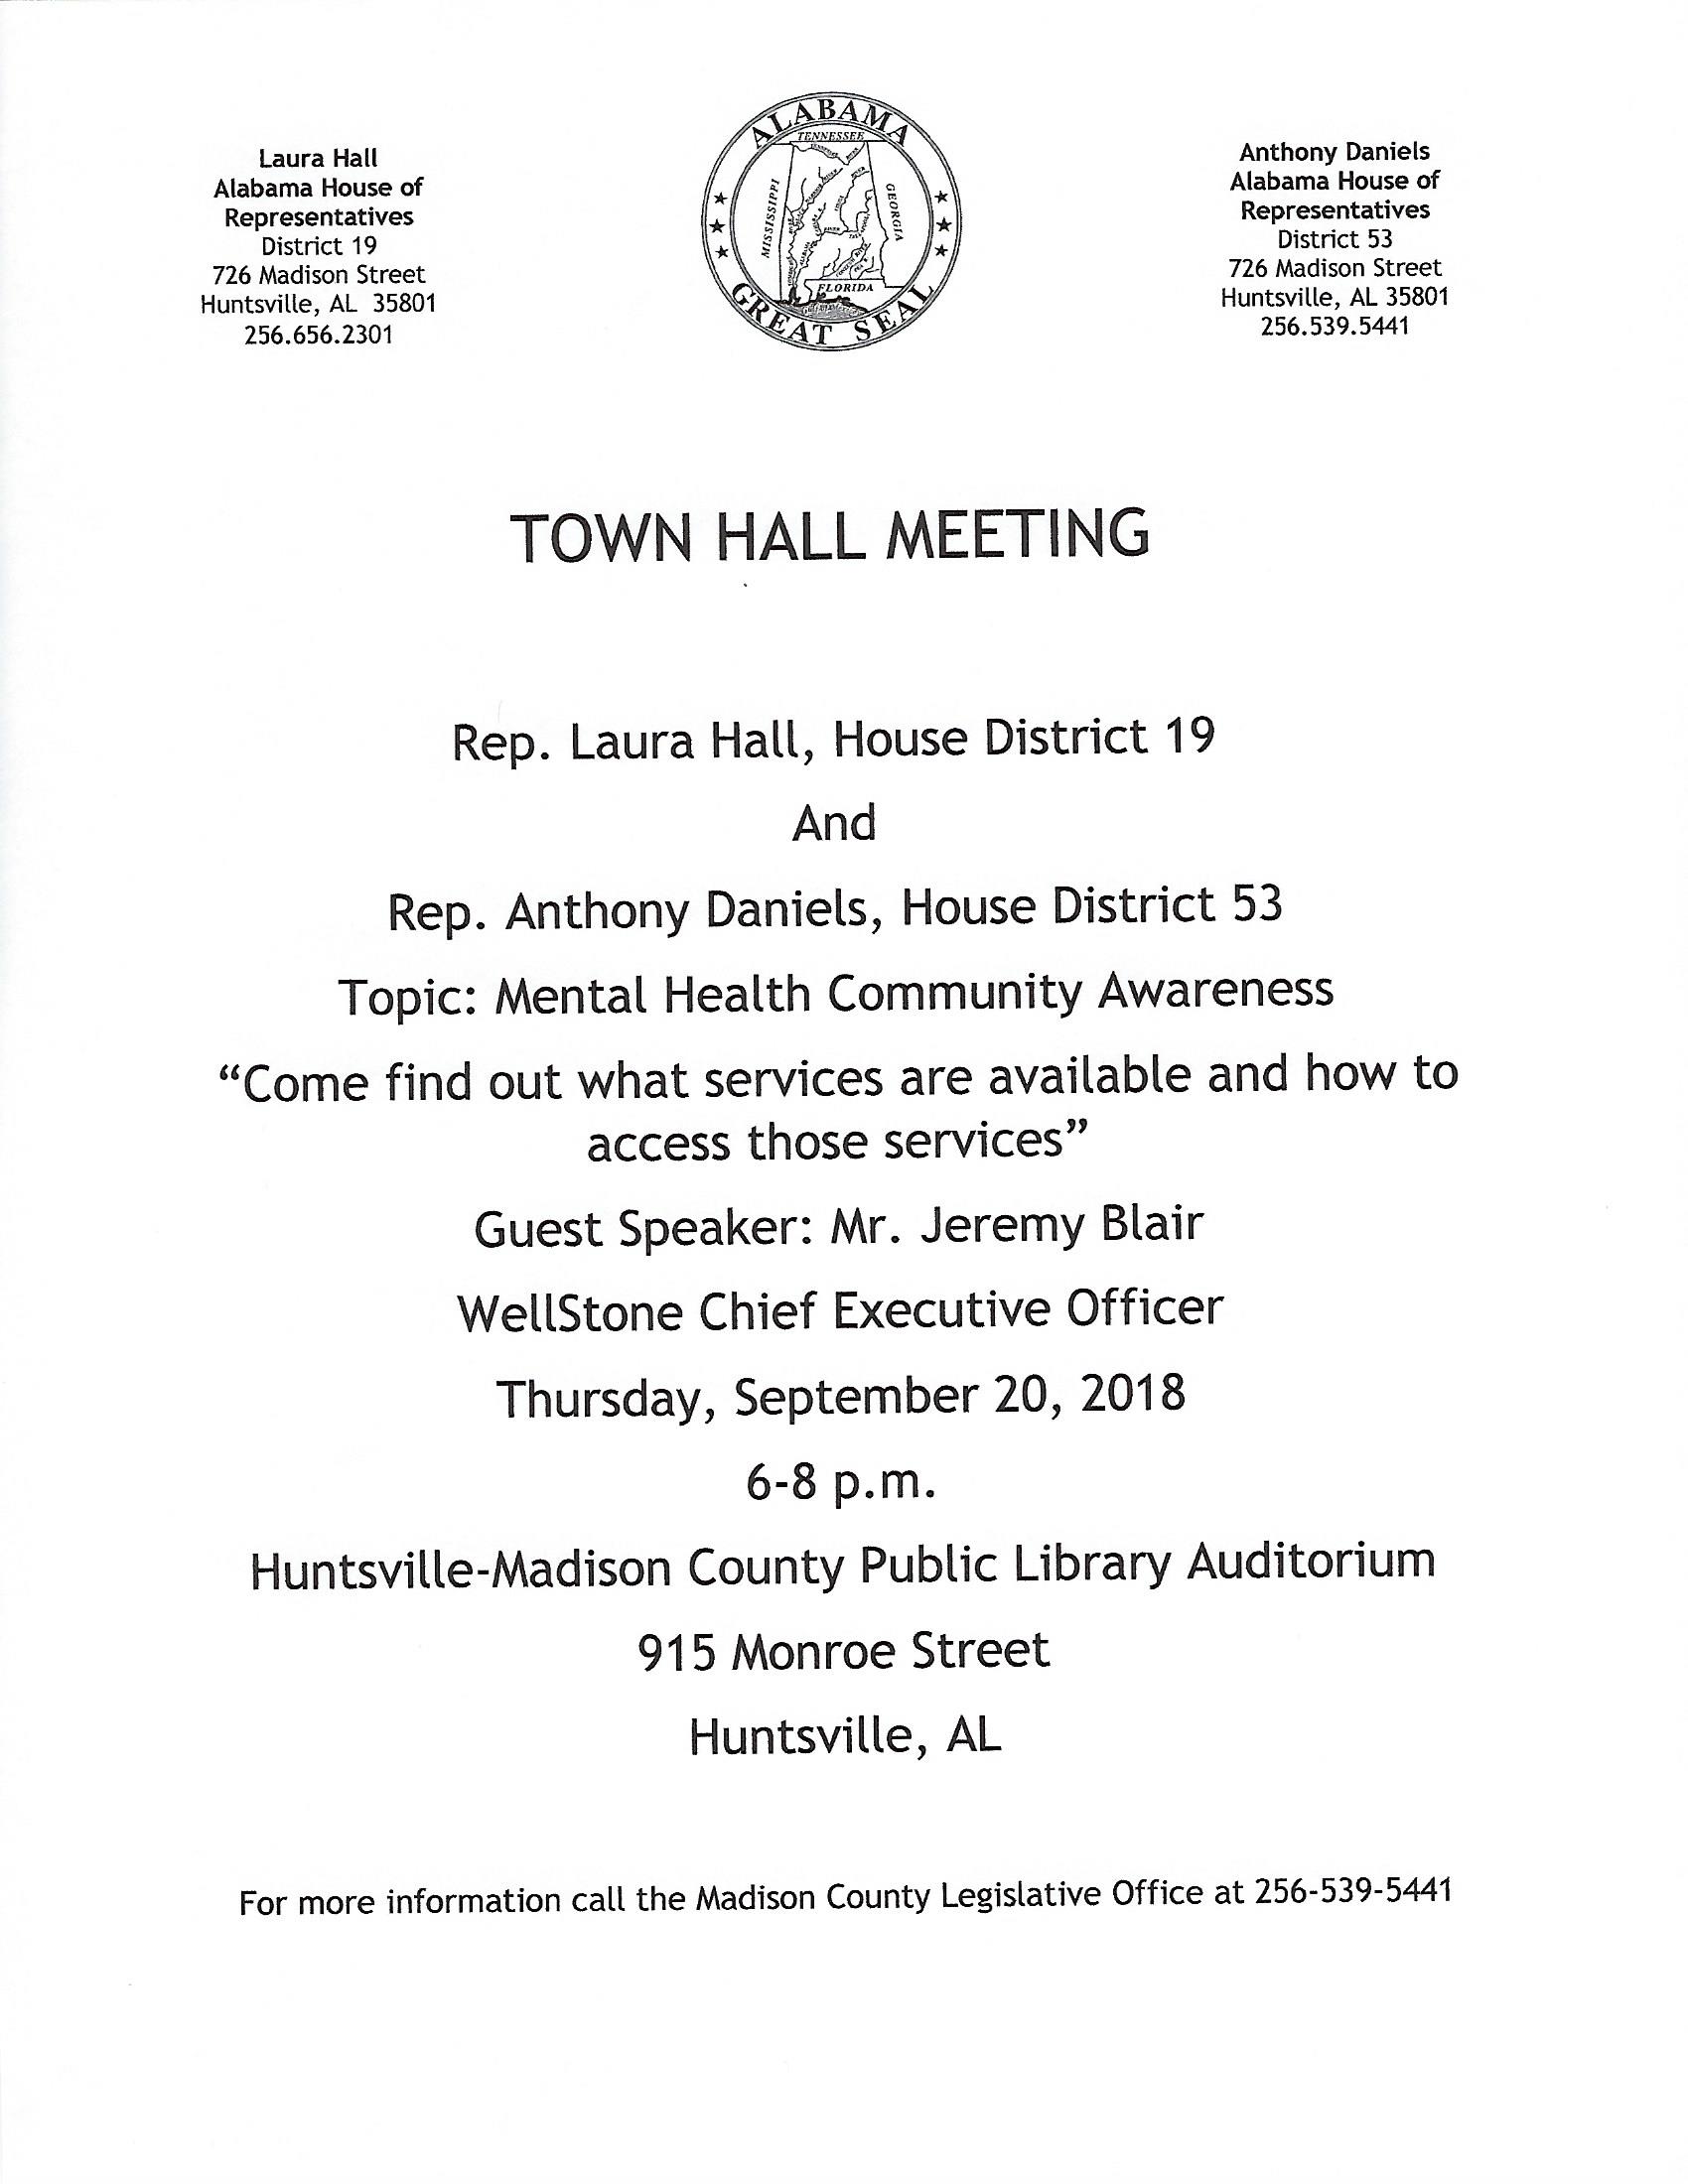 Town Hall Meeting - Mental Health Community Awareness